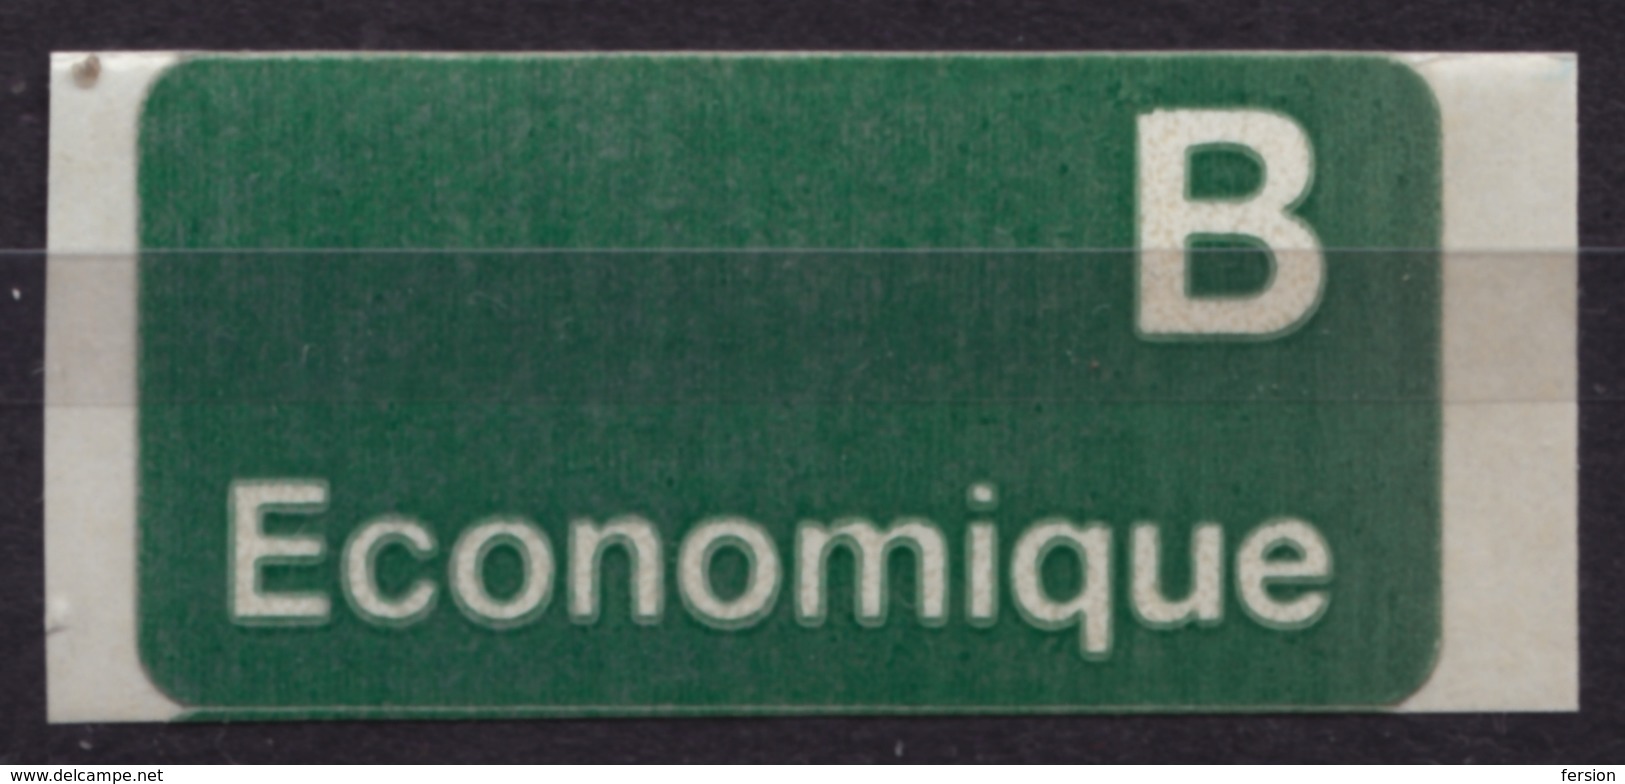 B Economique Vignette Label SEWDEN SVERIGE Self Adhesive Not Used - Automatenmarken [ATM]